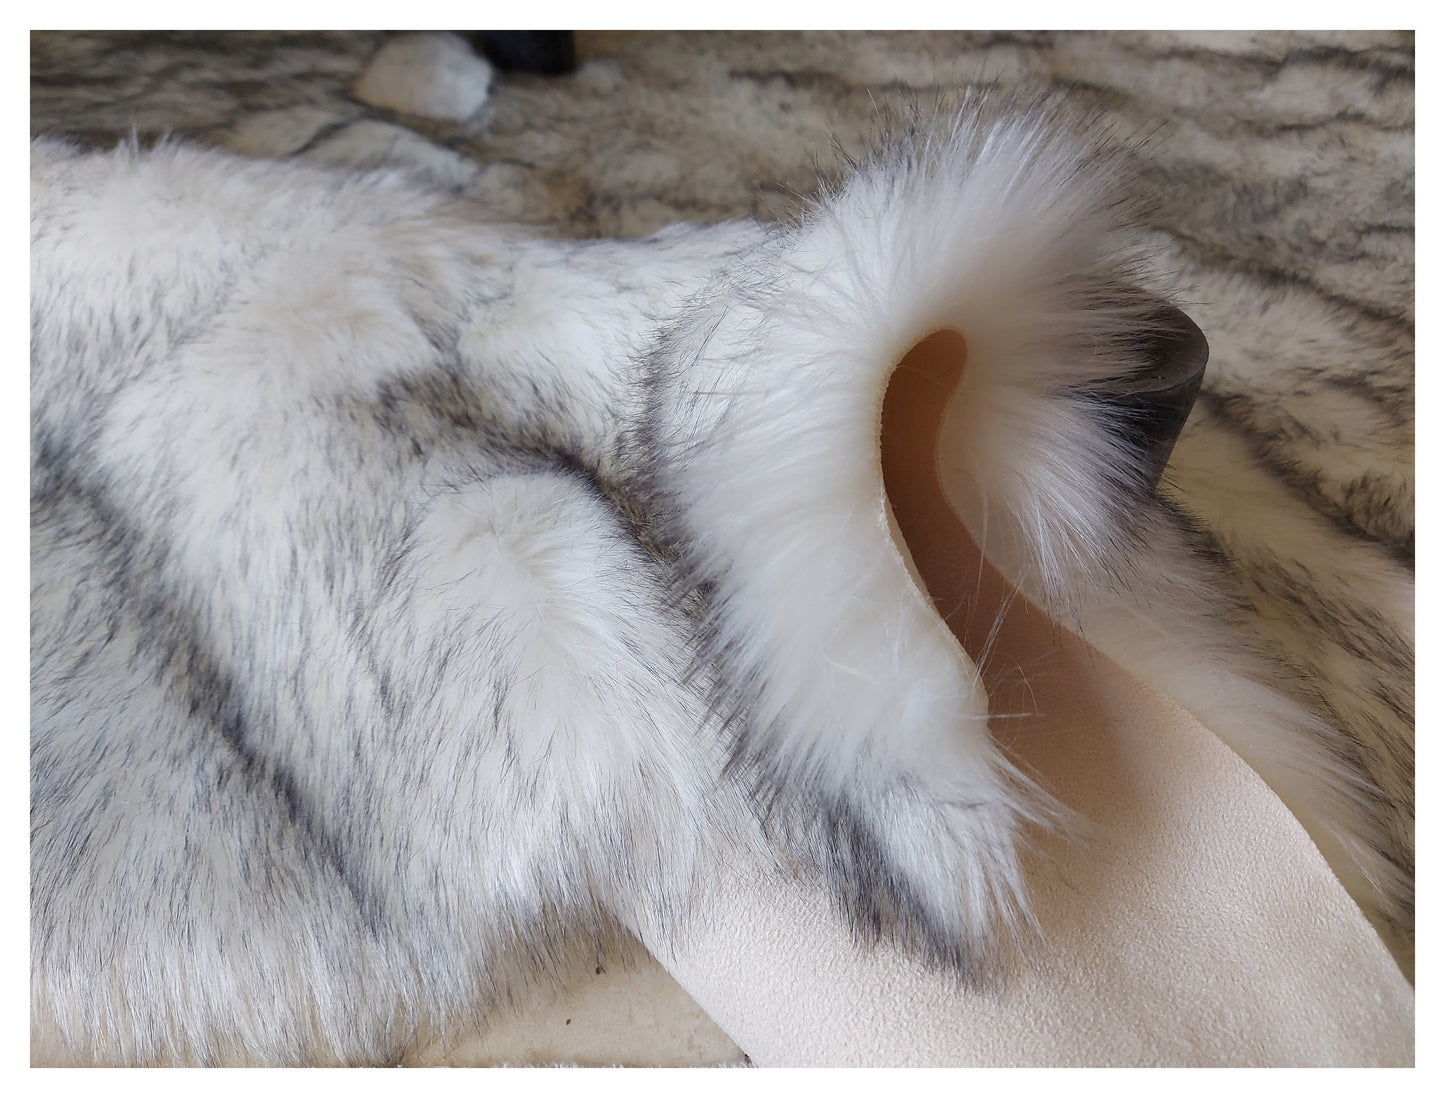 Faux  sheepskin rug Free Shape Octo Eight Pelt 6'X8' (180cm x 240cm)